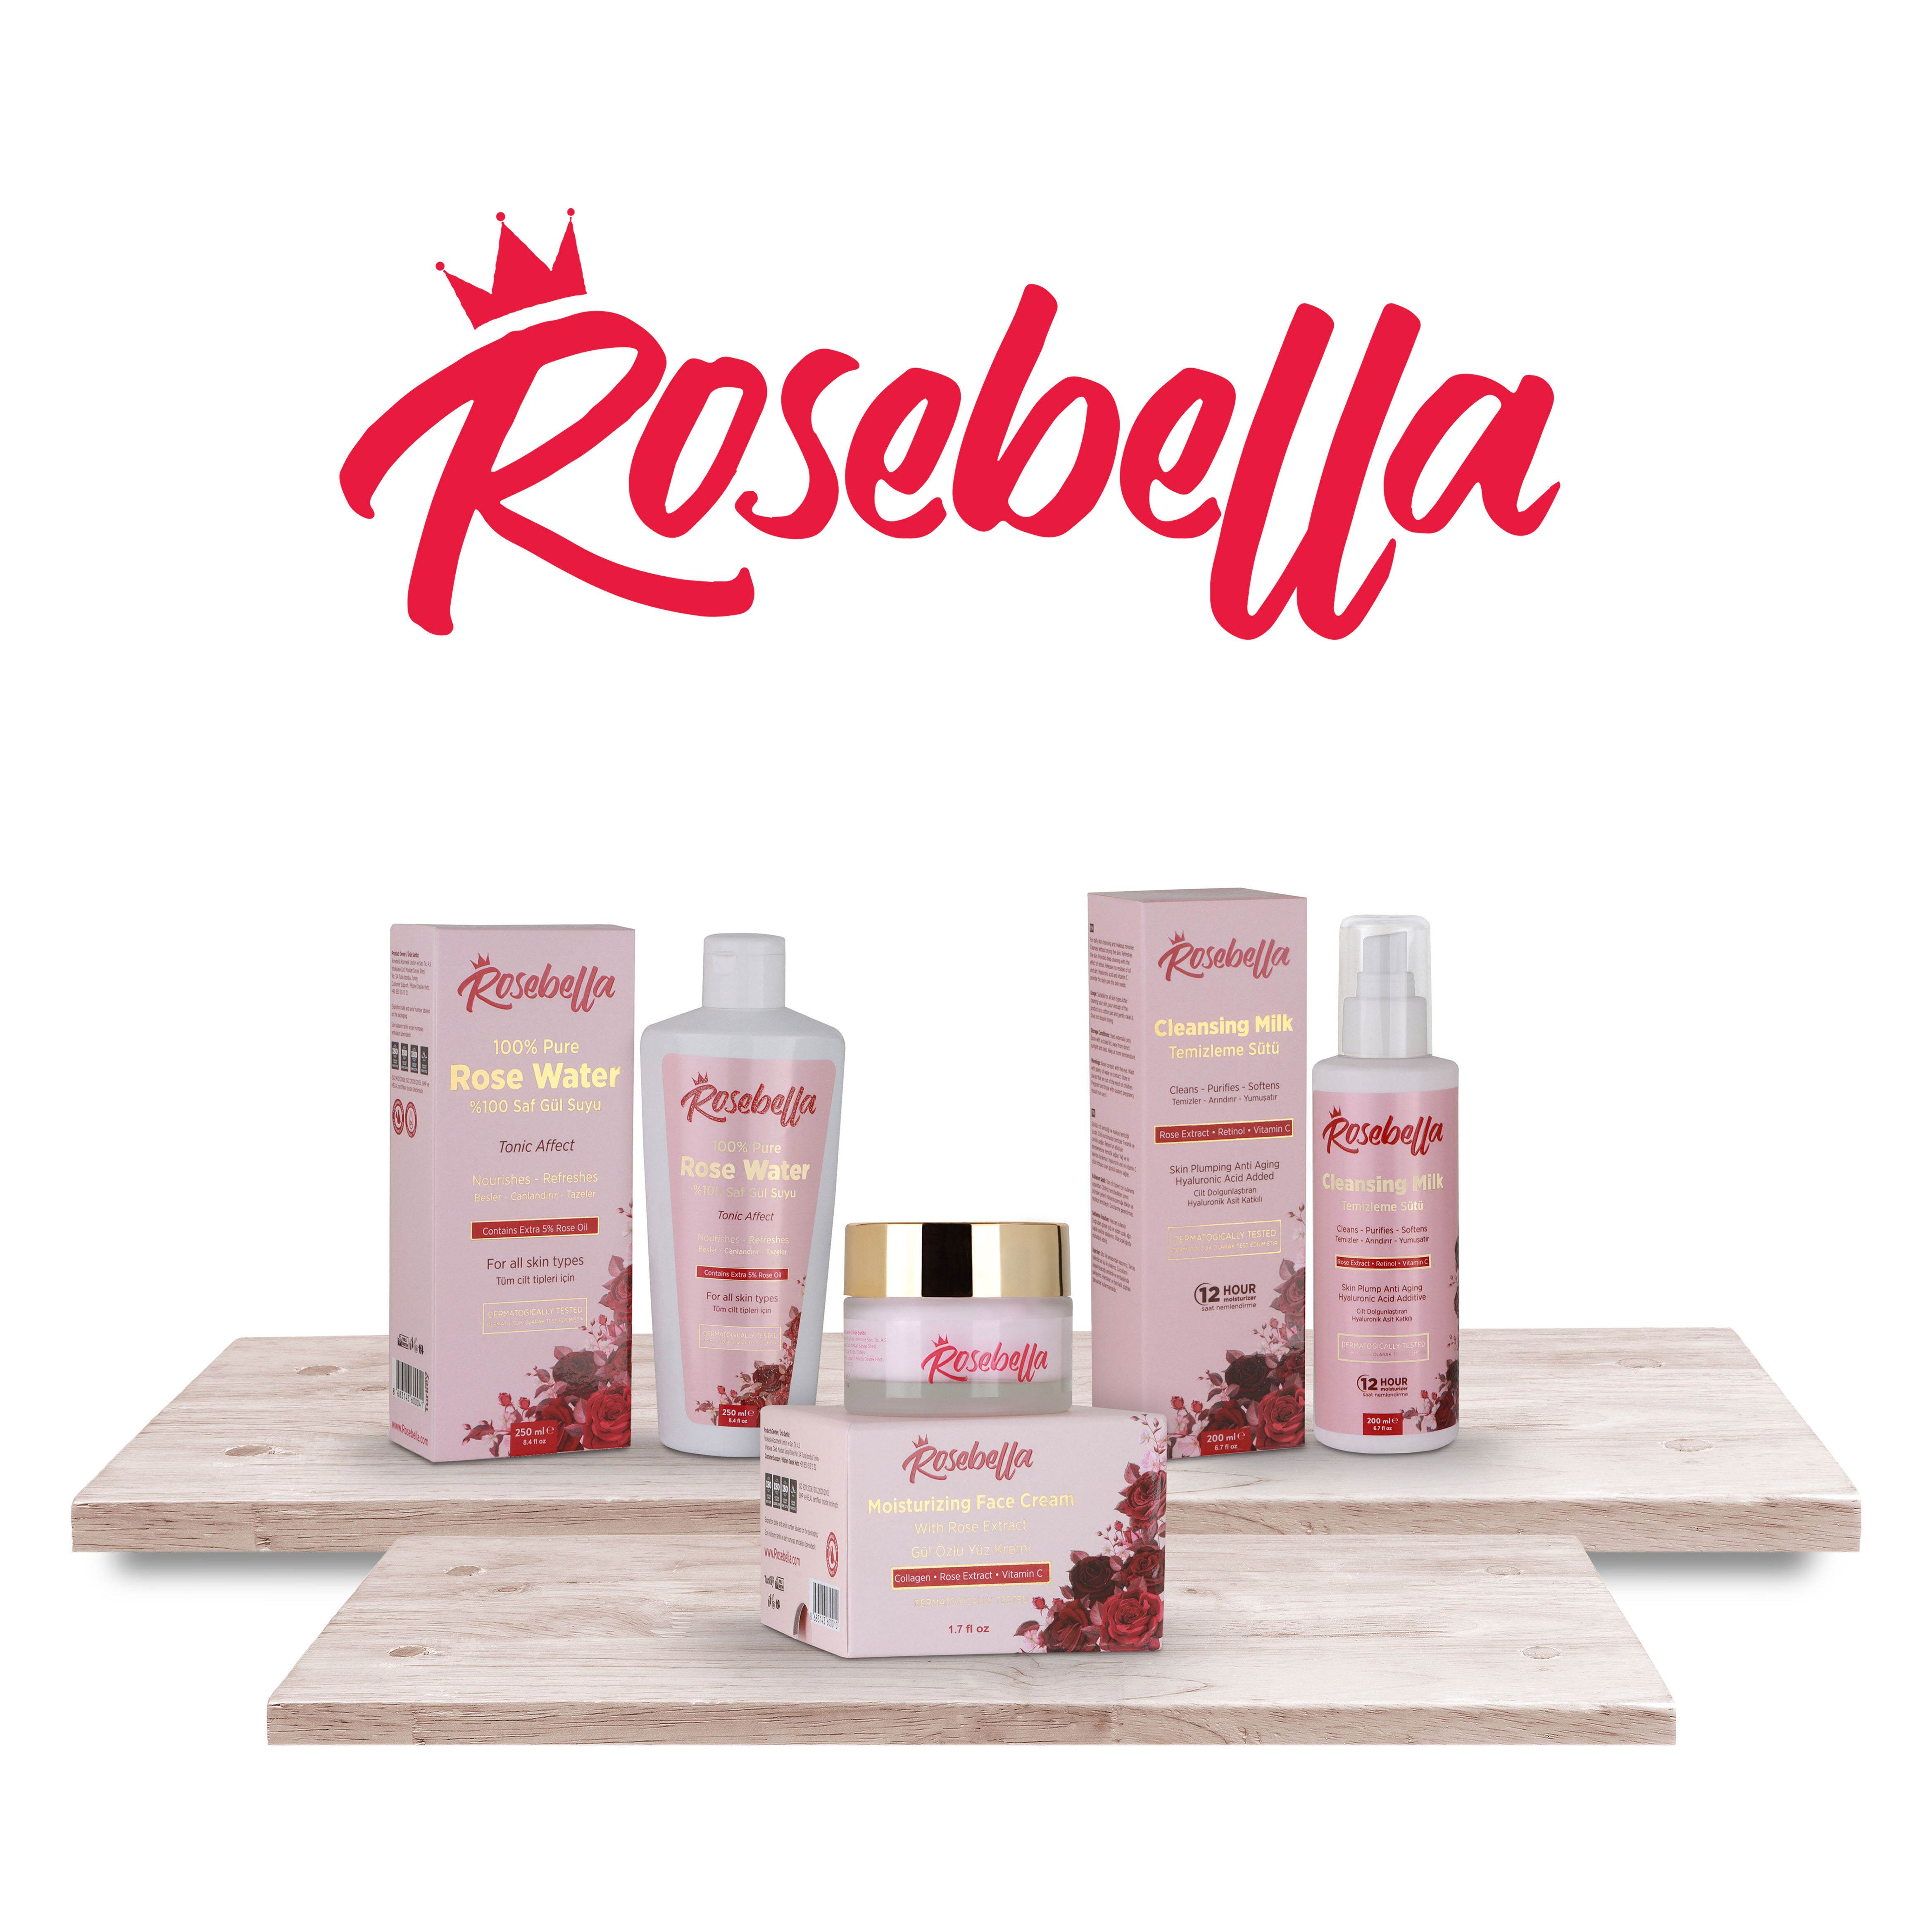 Rosebella